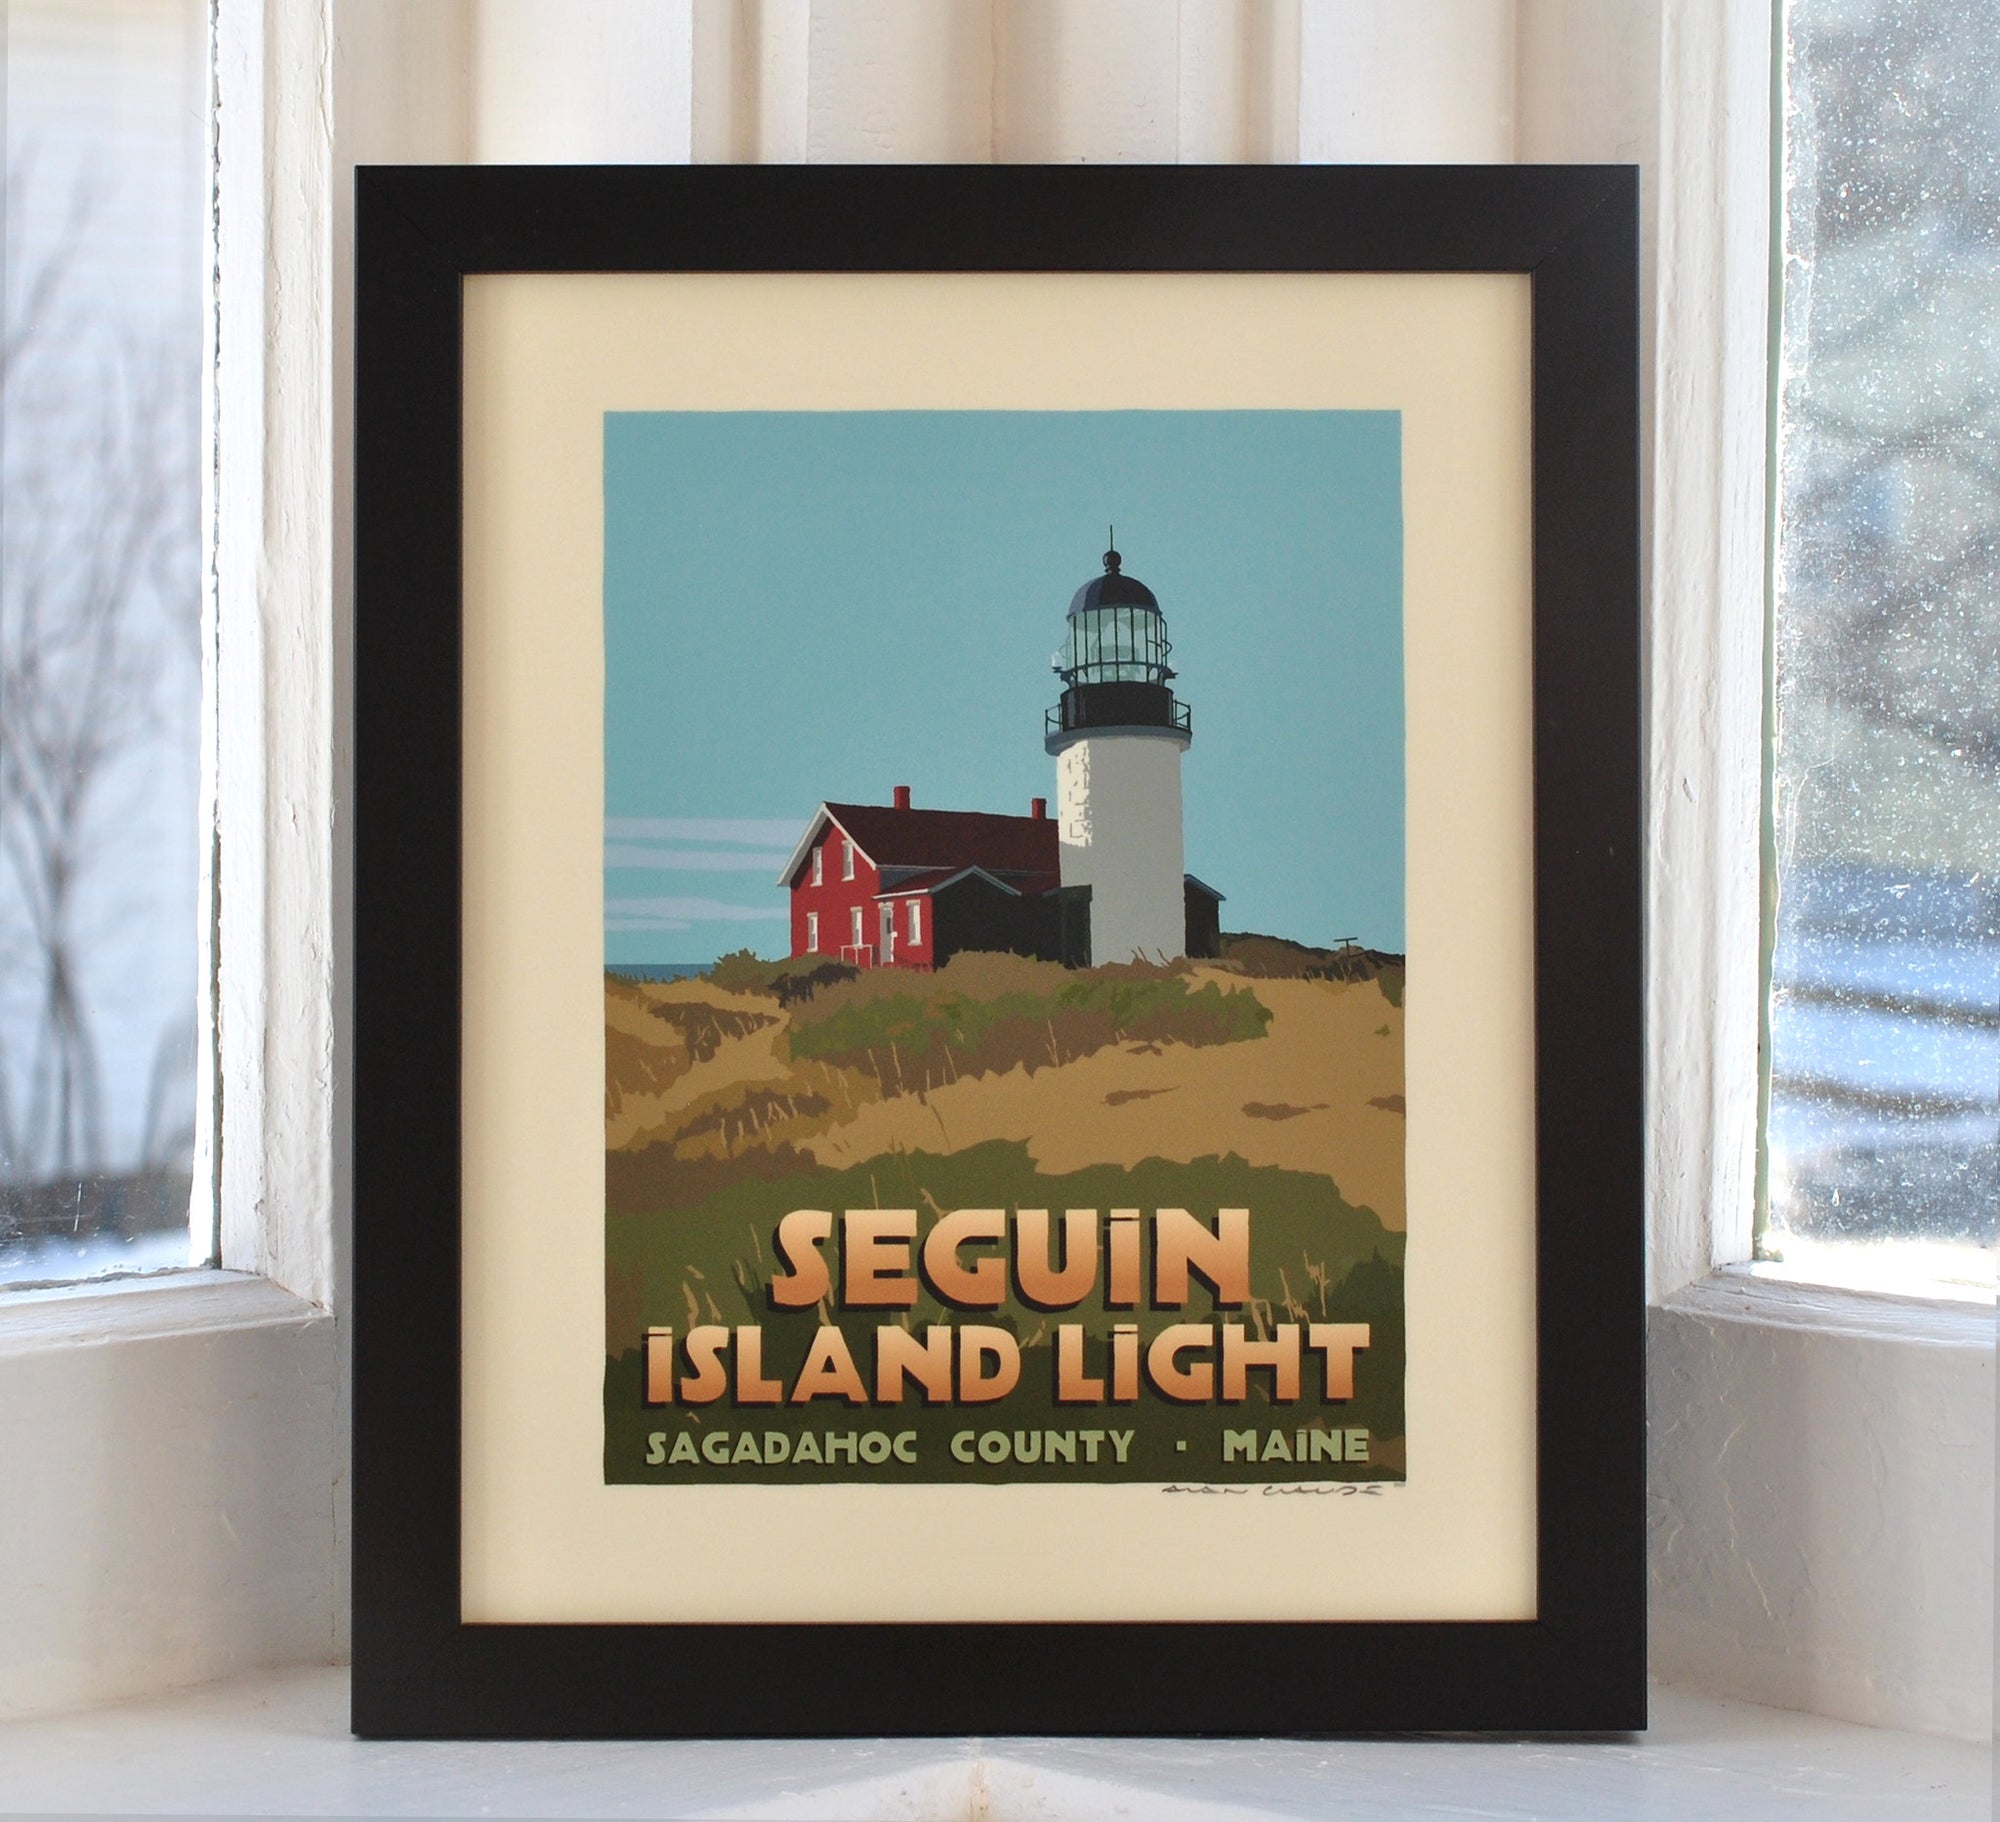 Seguin Island Light Art Print 8" x 10" Framed Travel Poster By Alan Claude - Maine